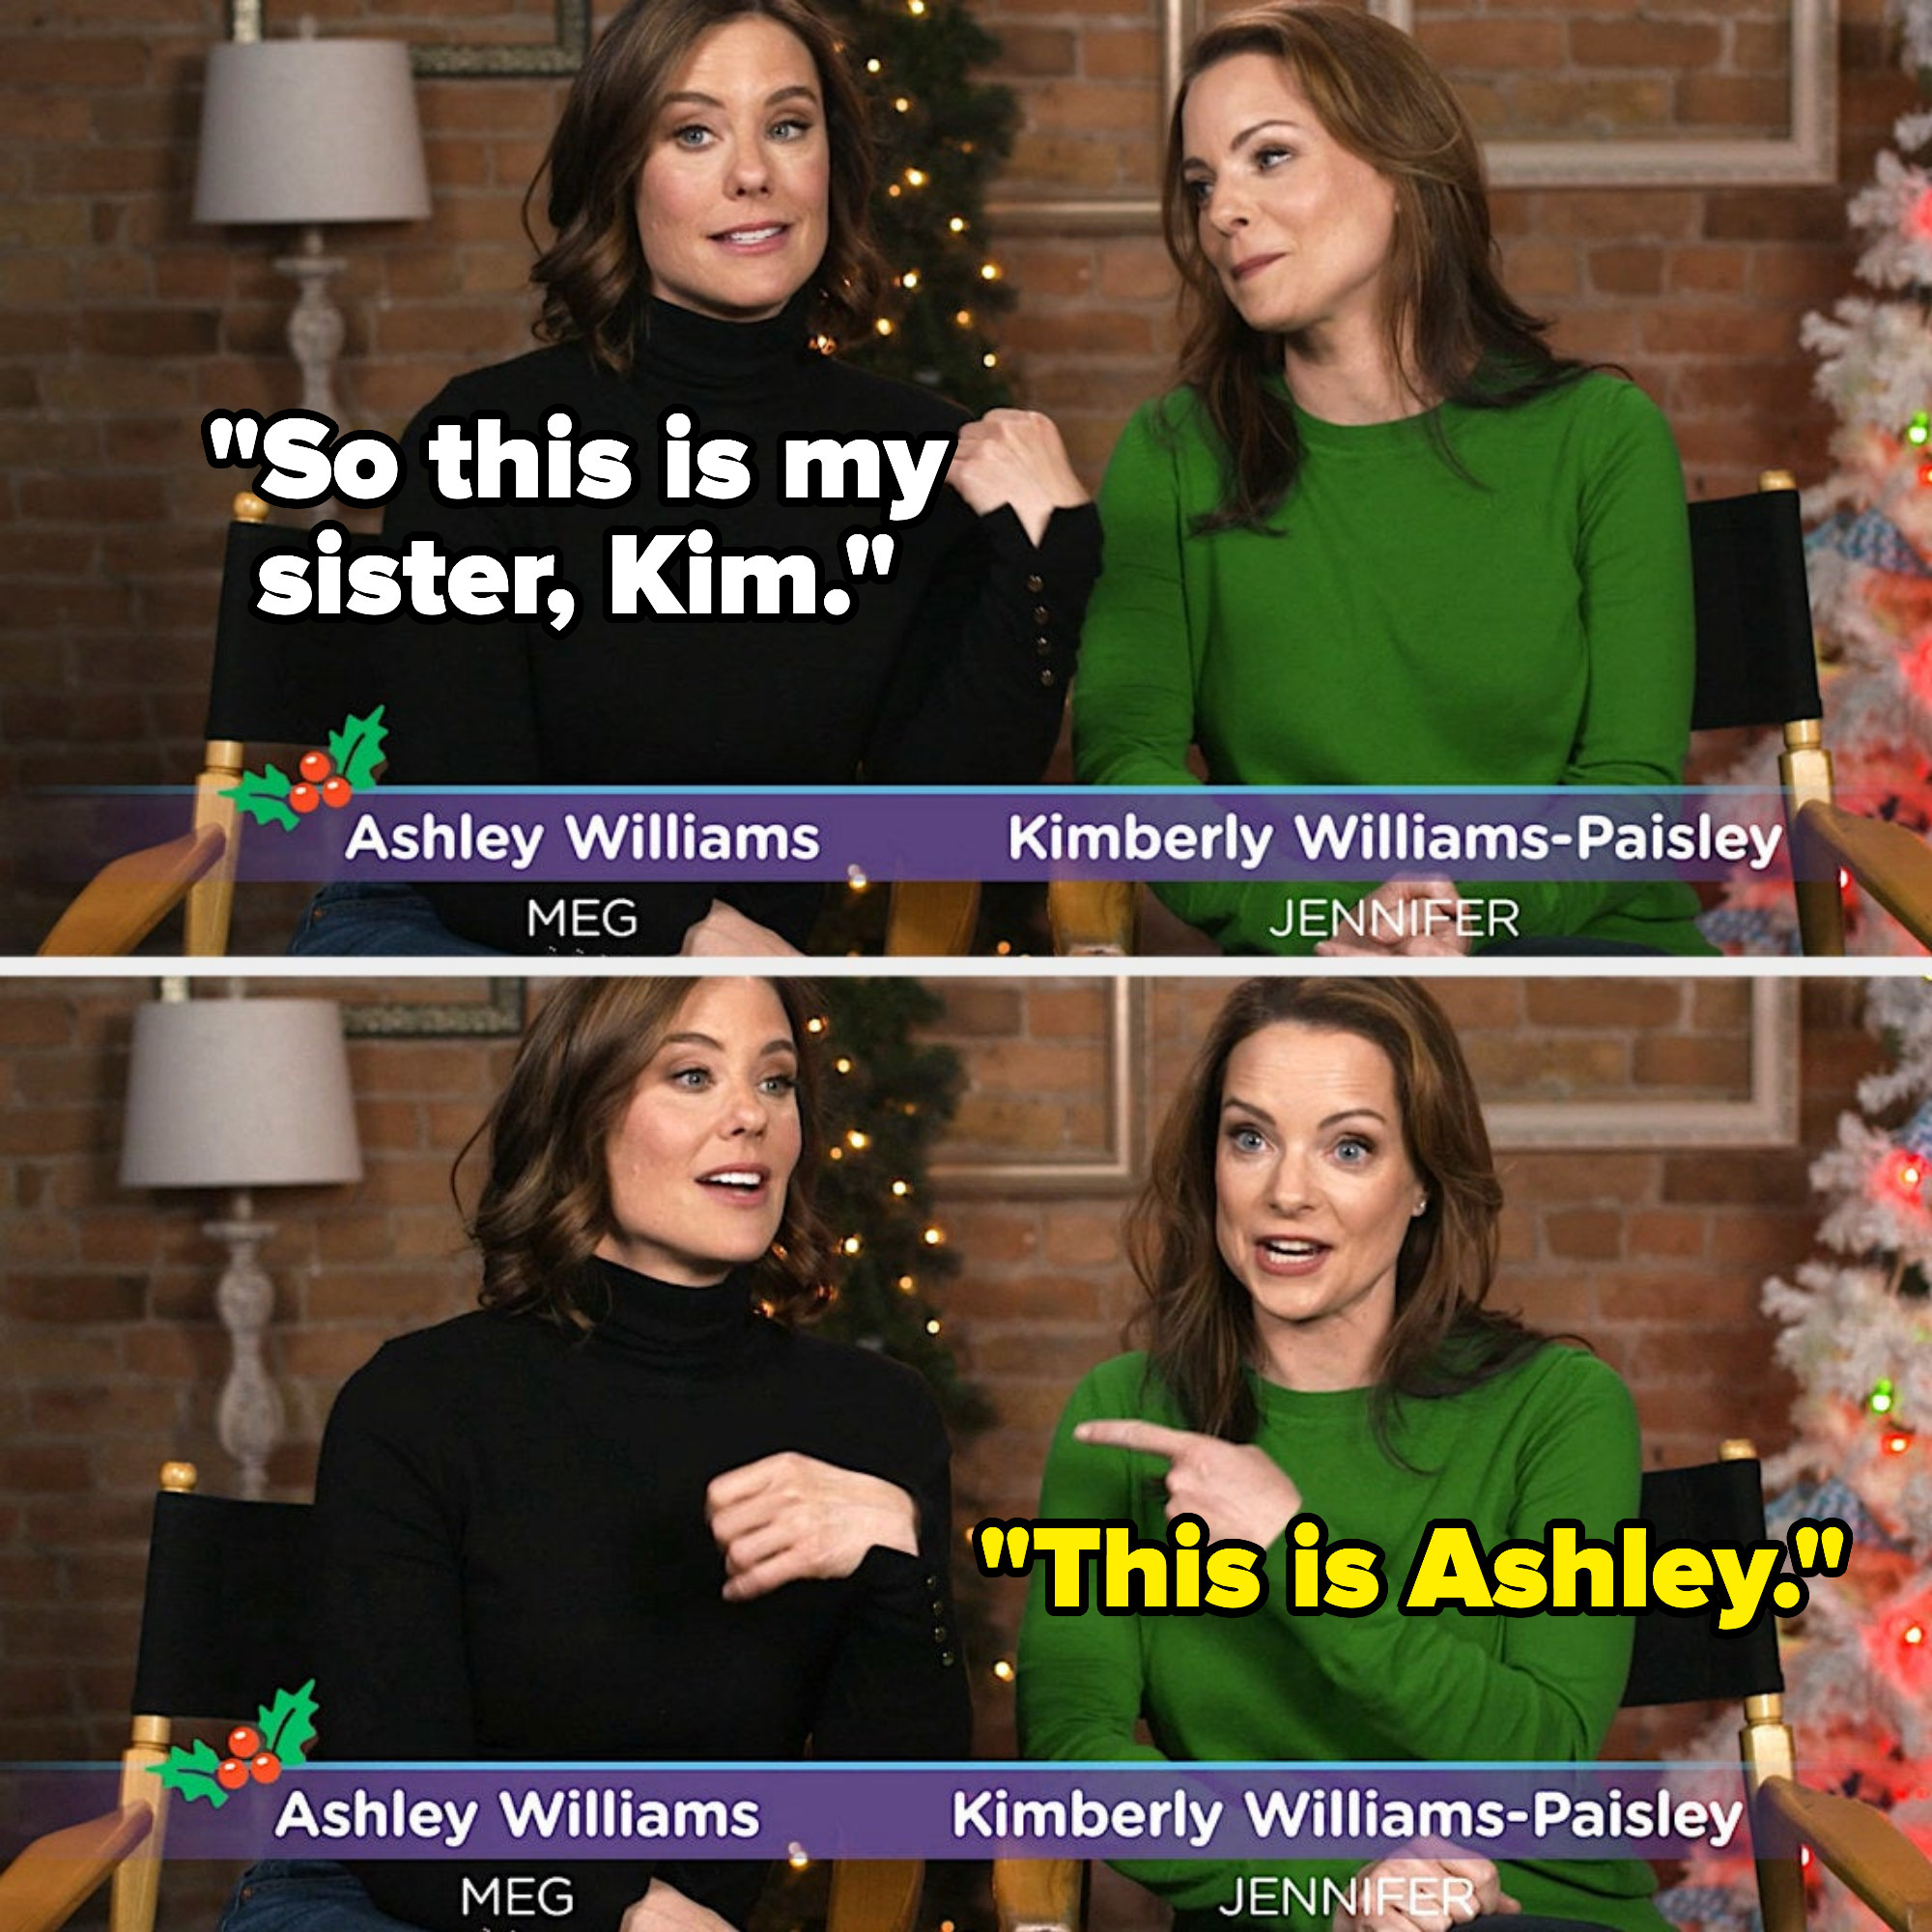 Ashley Williams and Kimberly Williams-Paisley